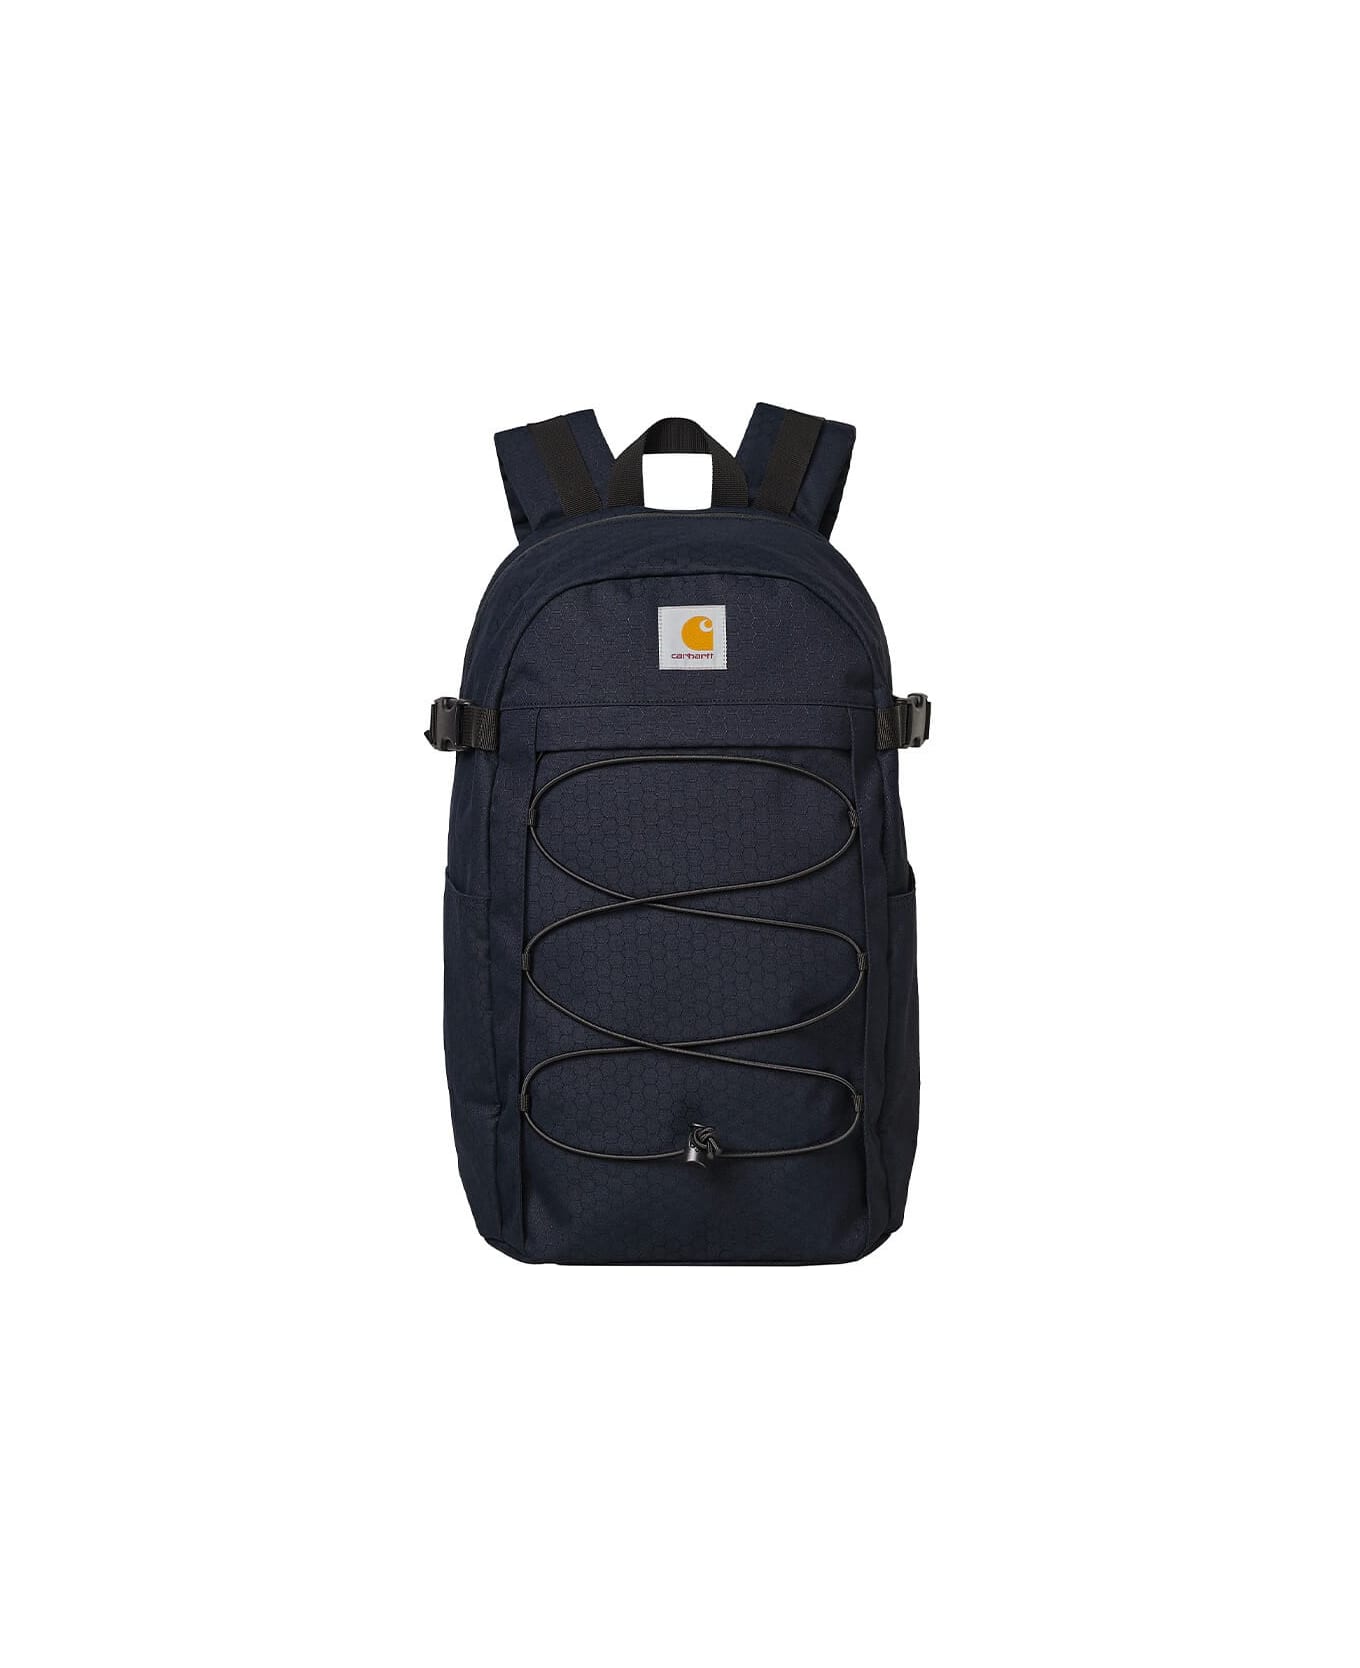 Urban Backpack Carhartt WIP Delta Backpack